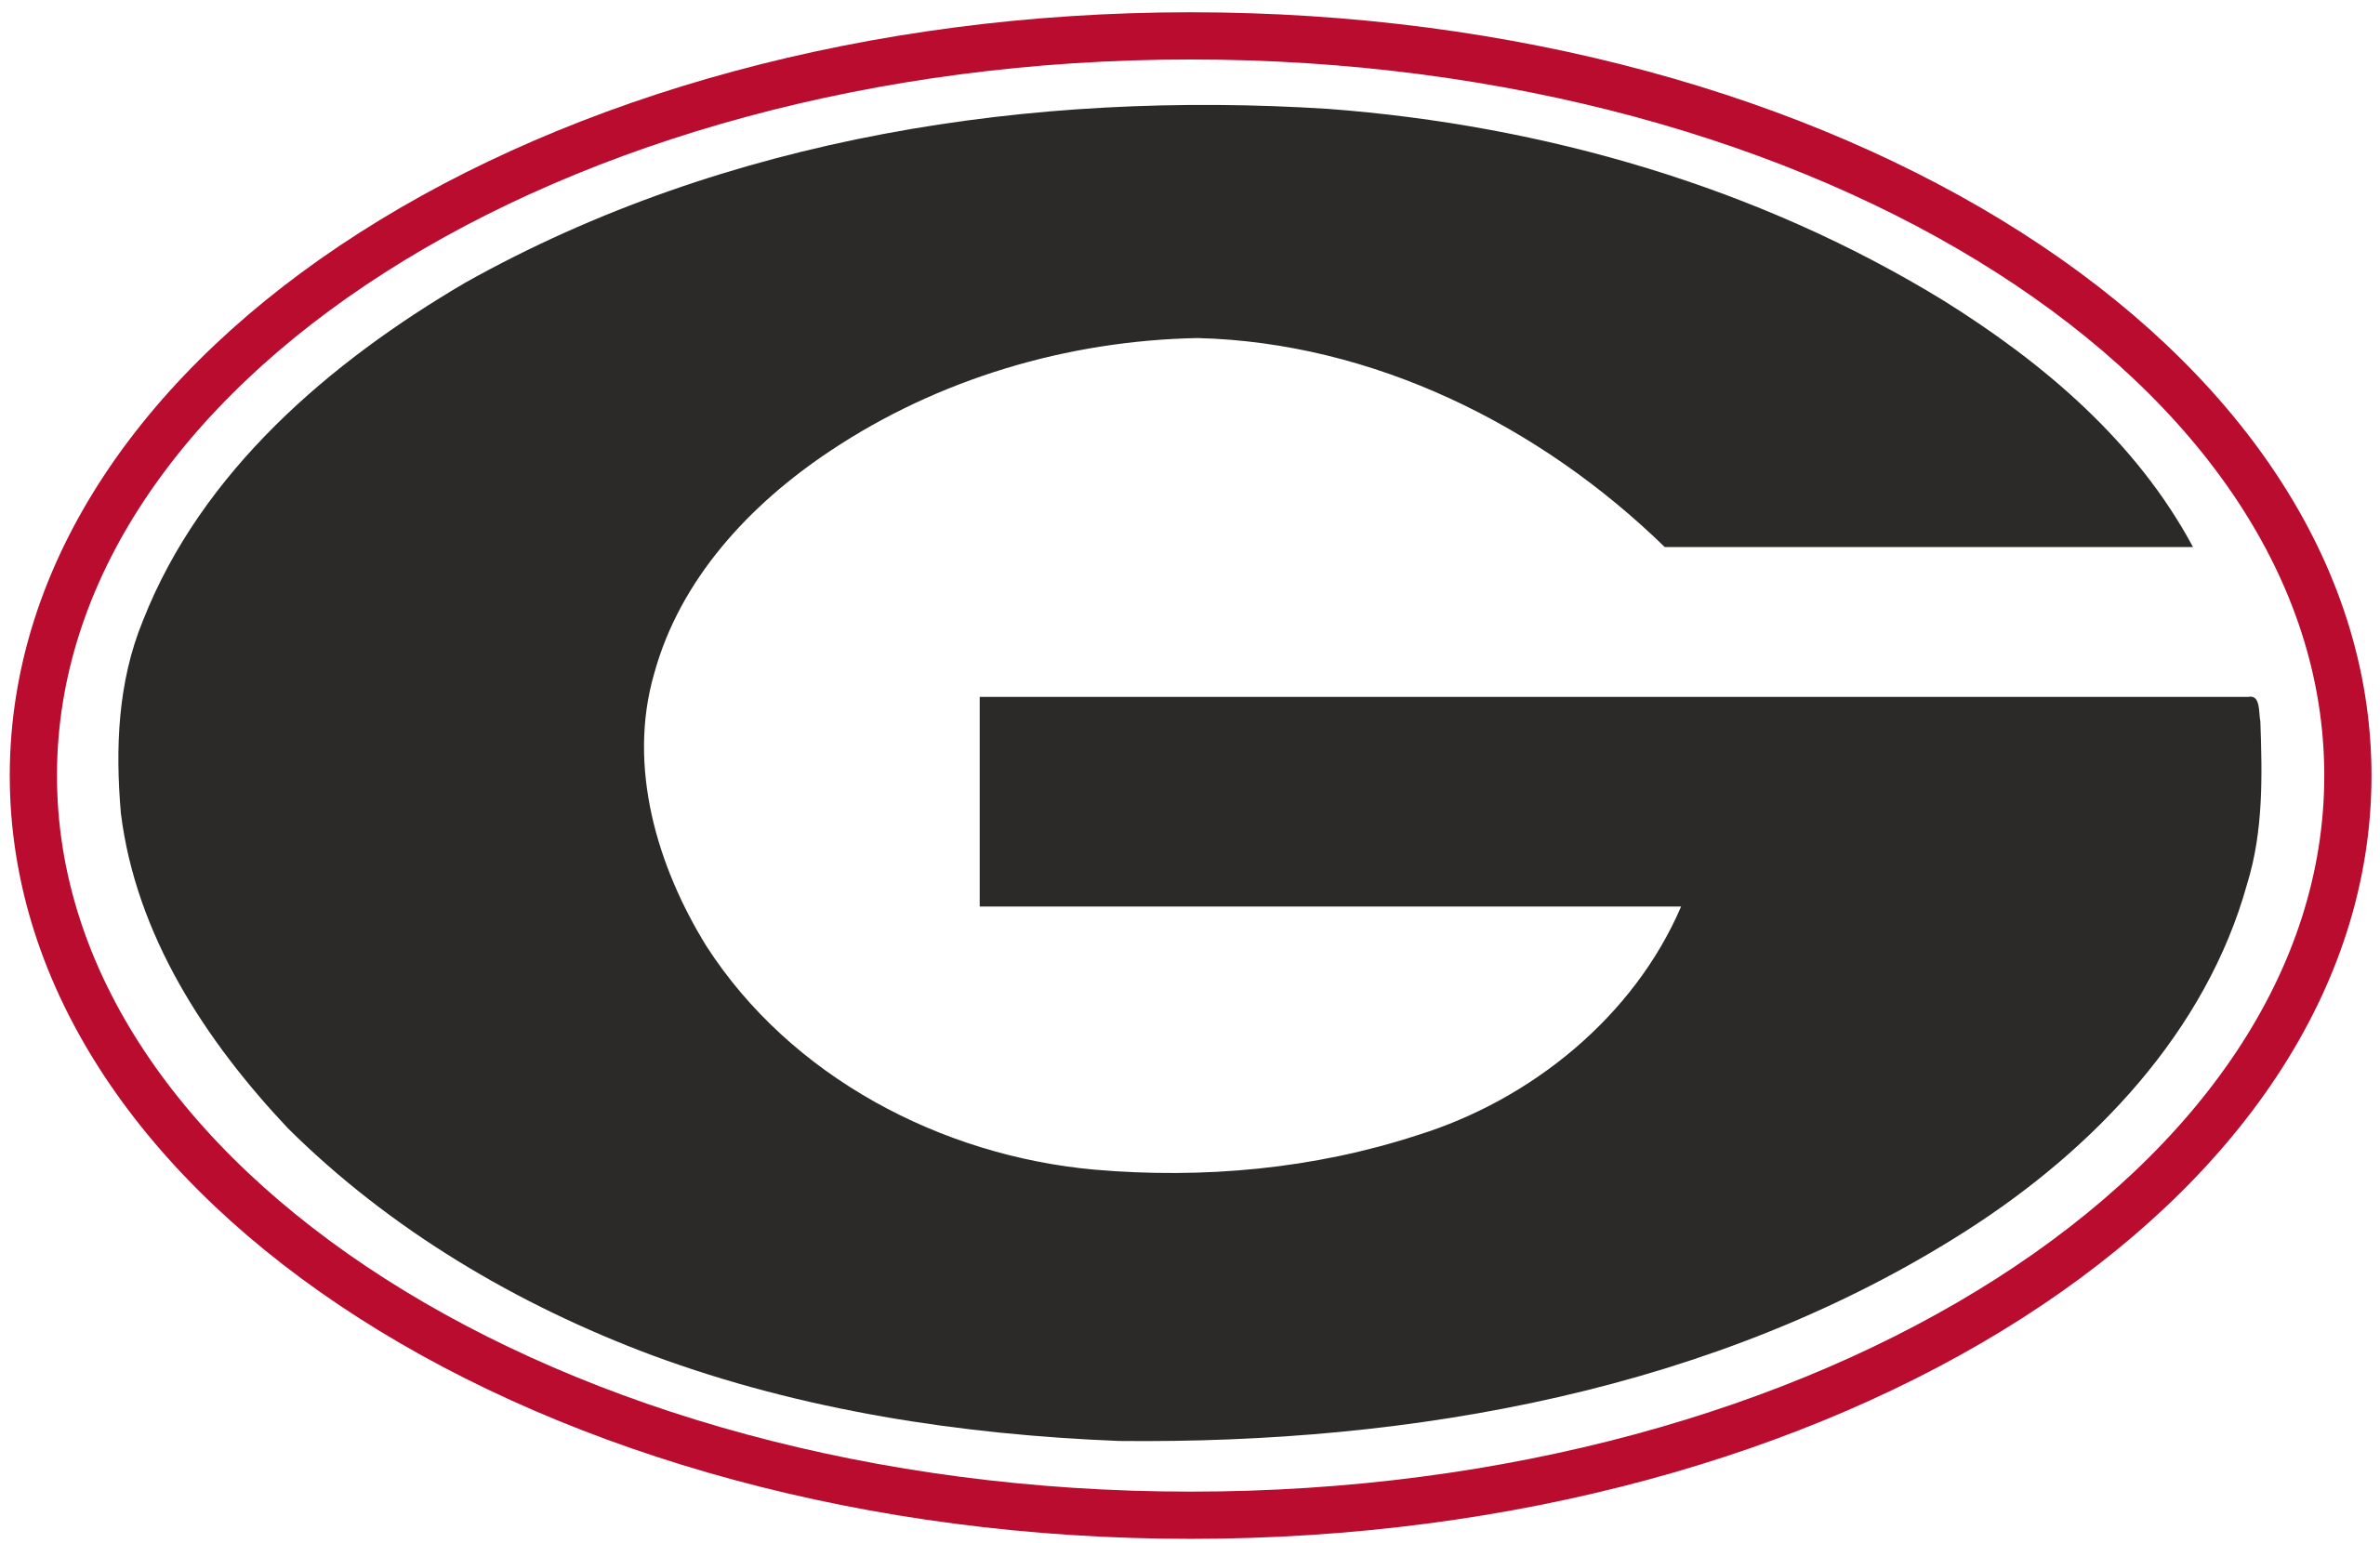 File:Georgia Athletics logo.svg - Wikimedia Commons